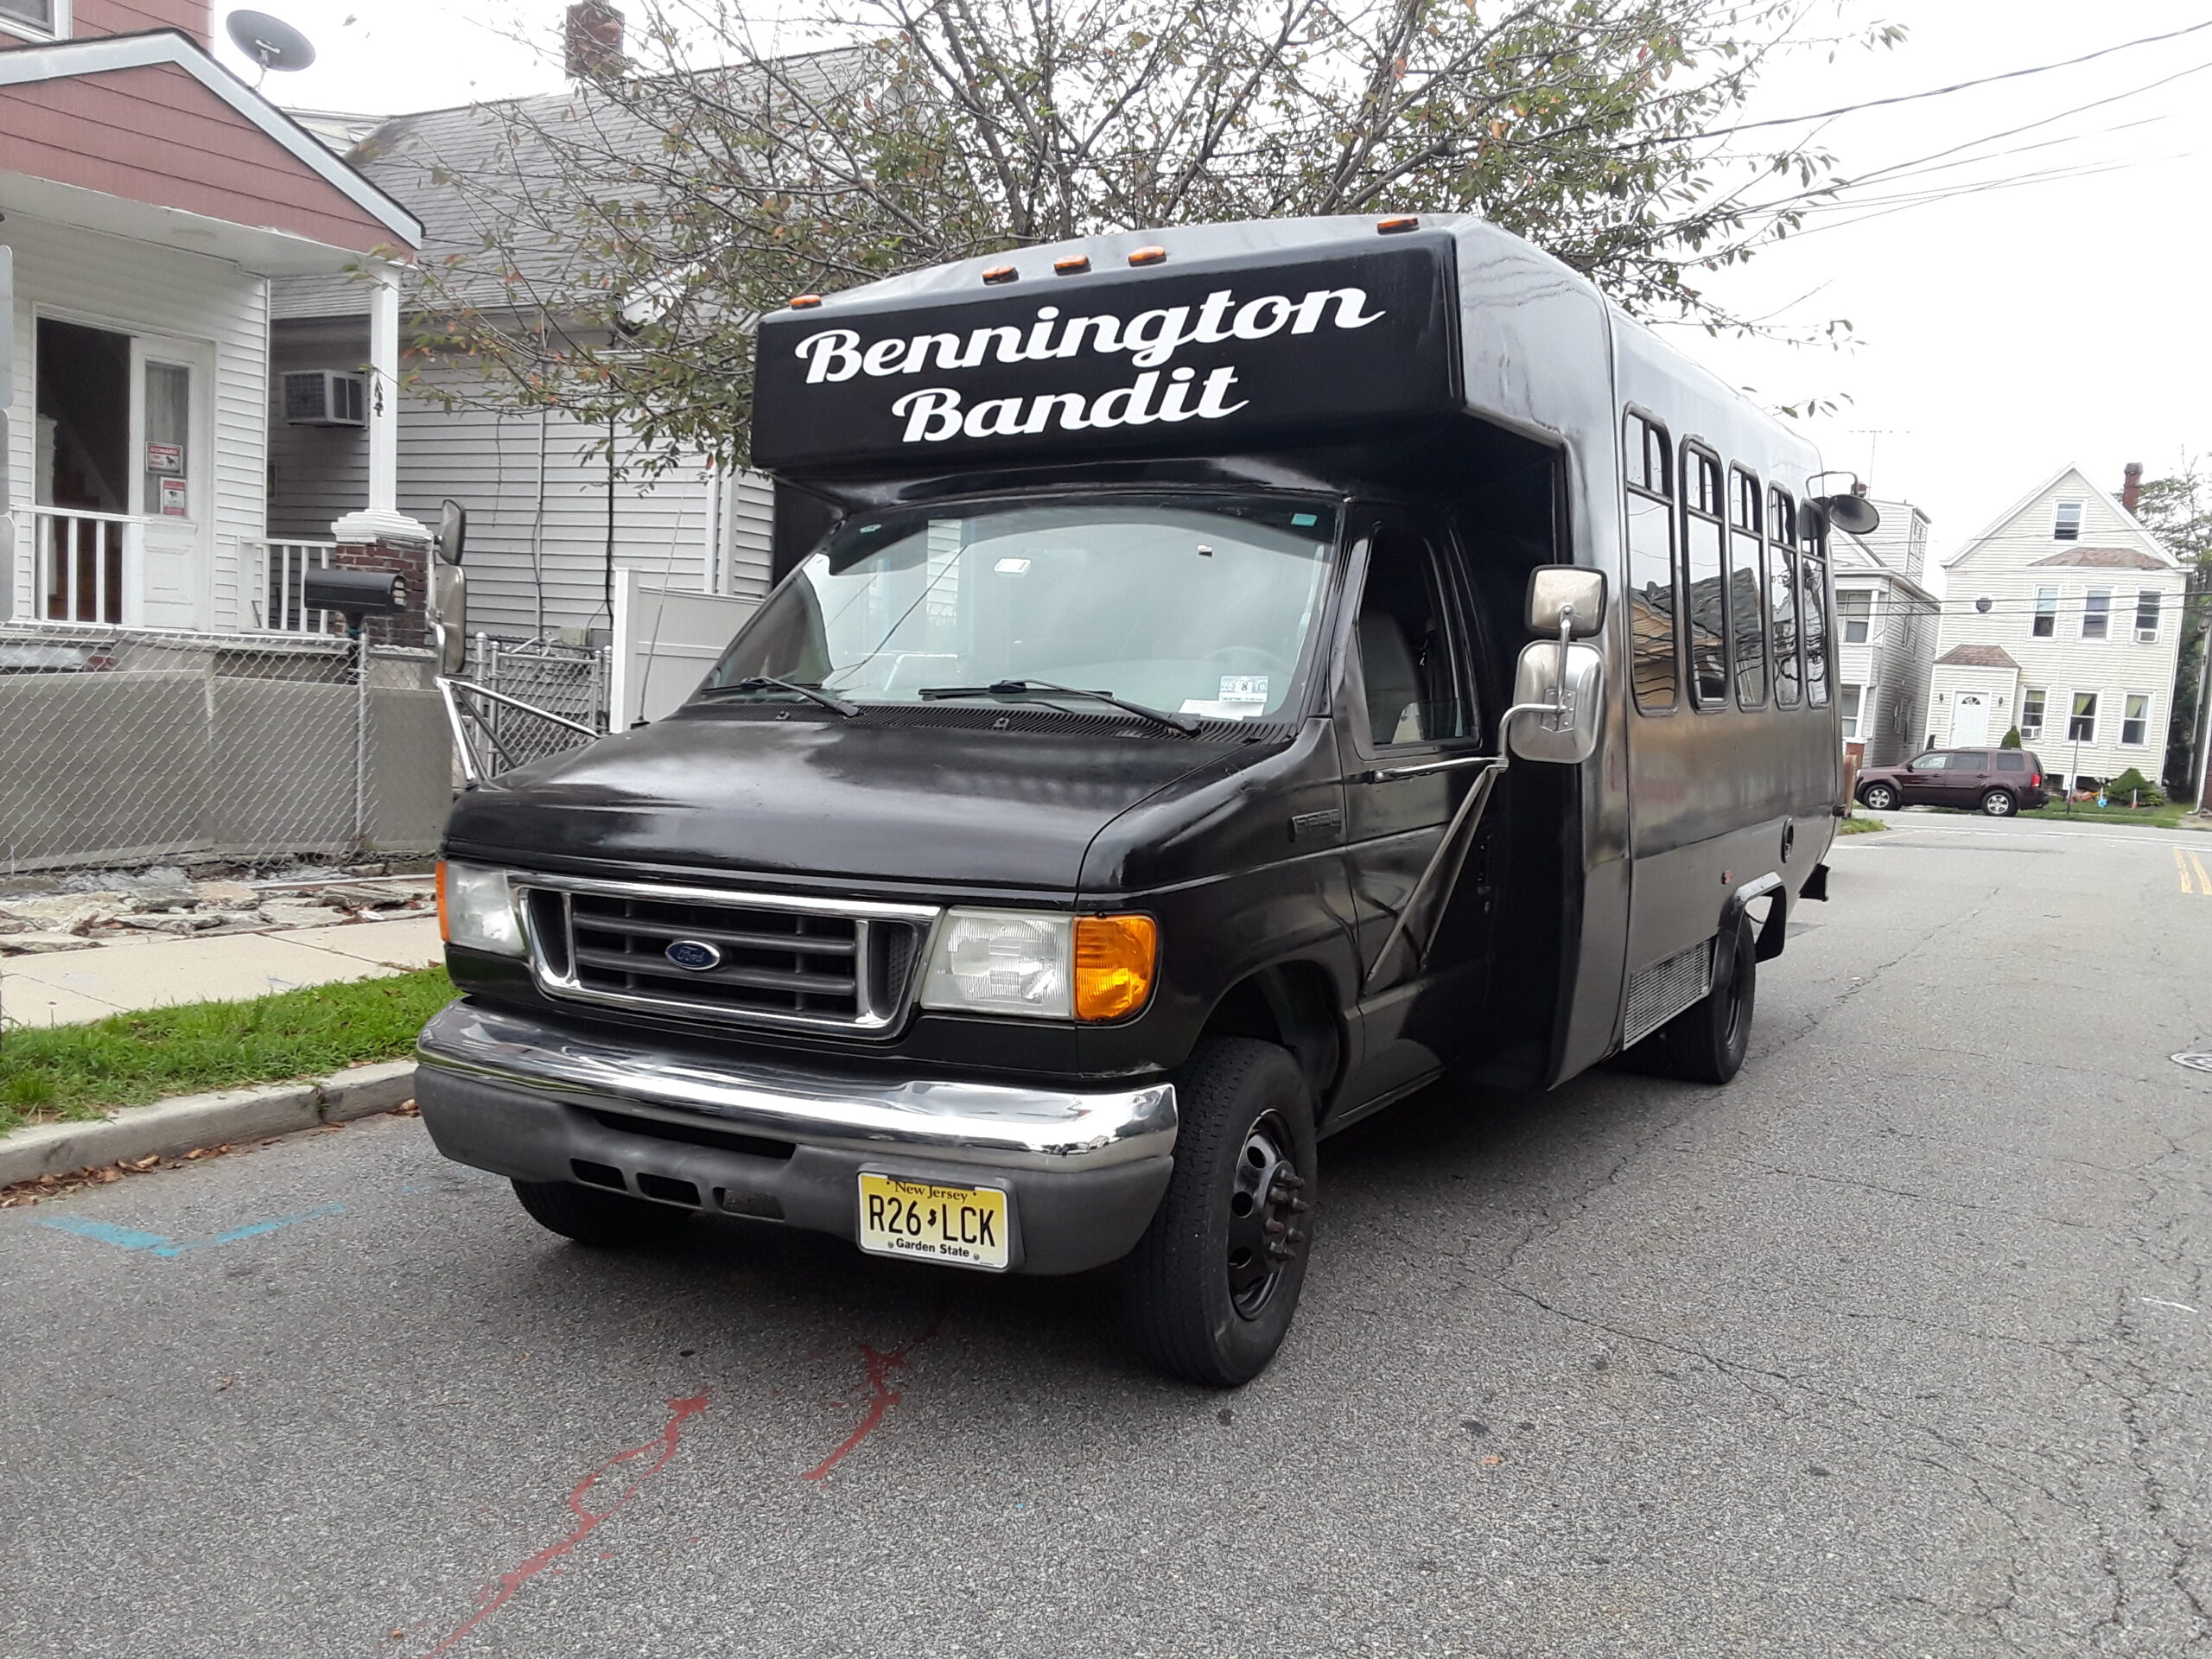 New York Party Bus Bennington Bandit